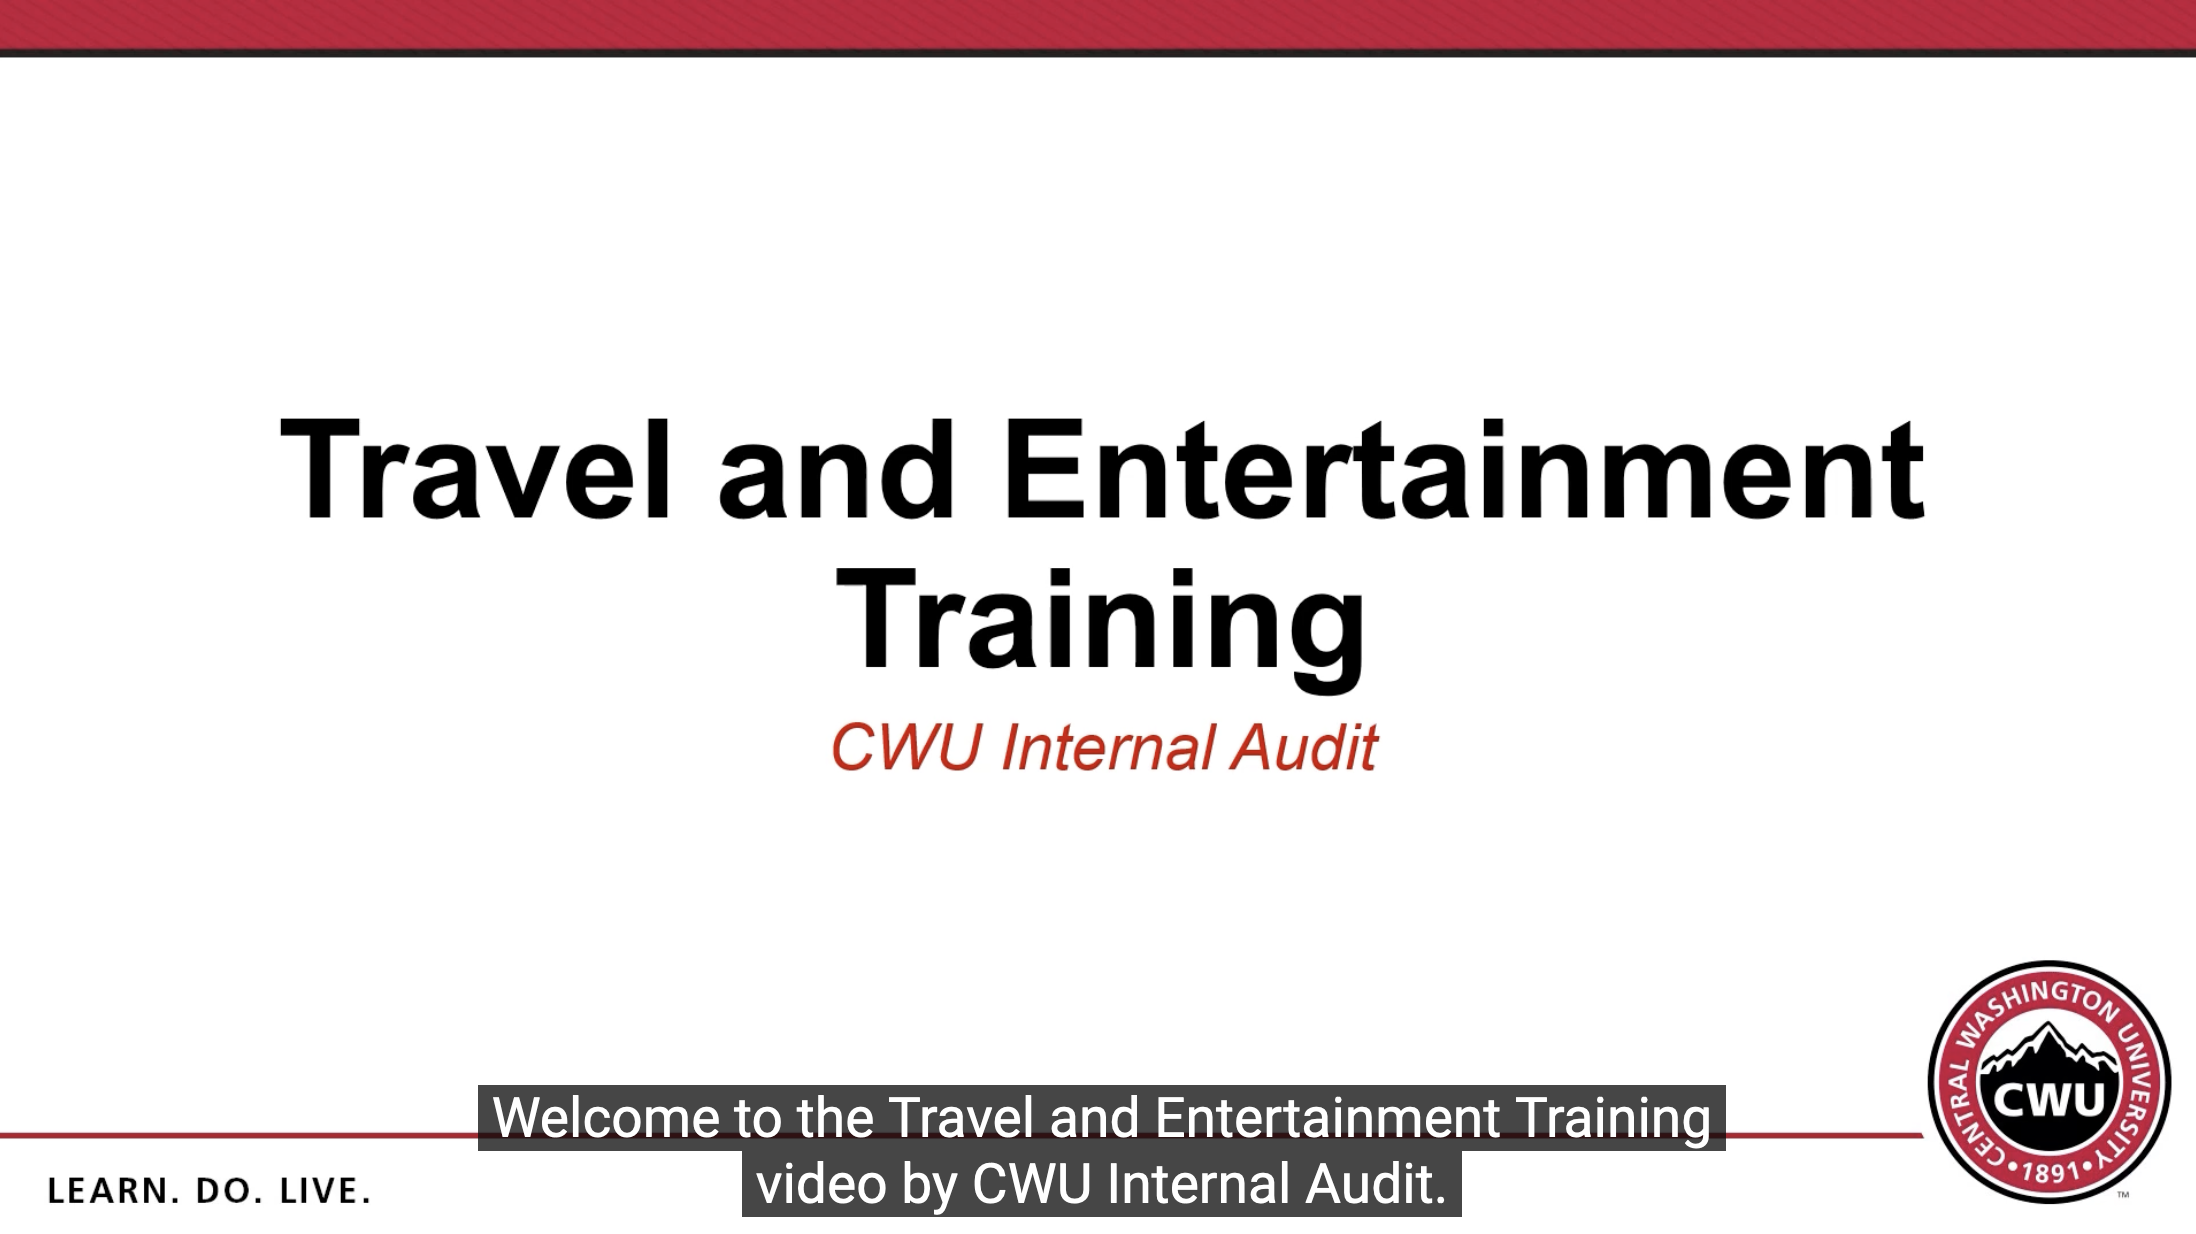 cwu.edu travel